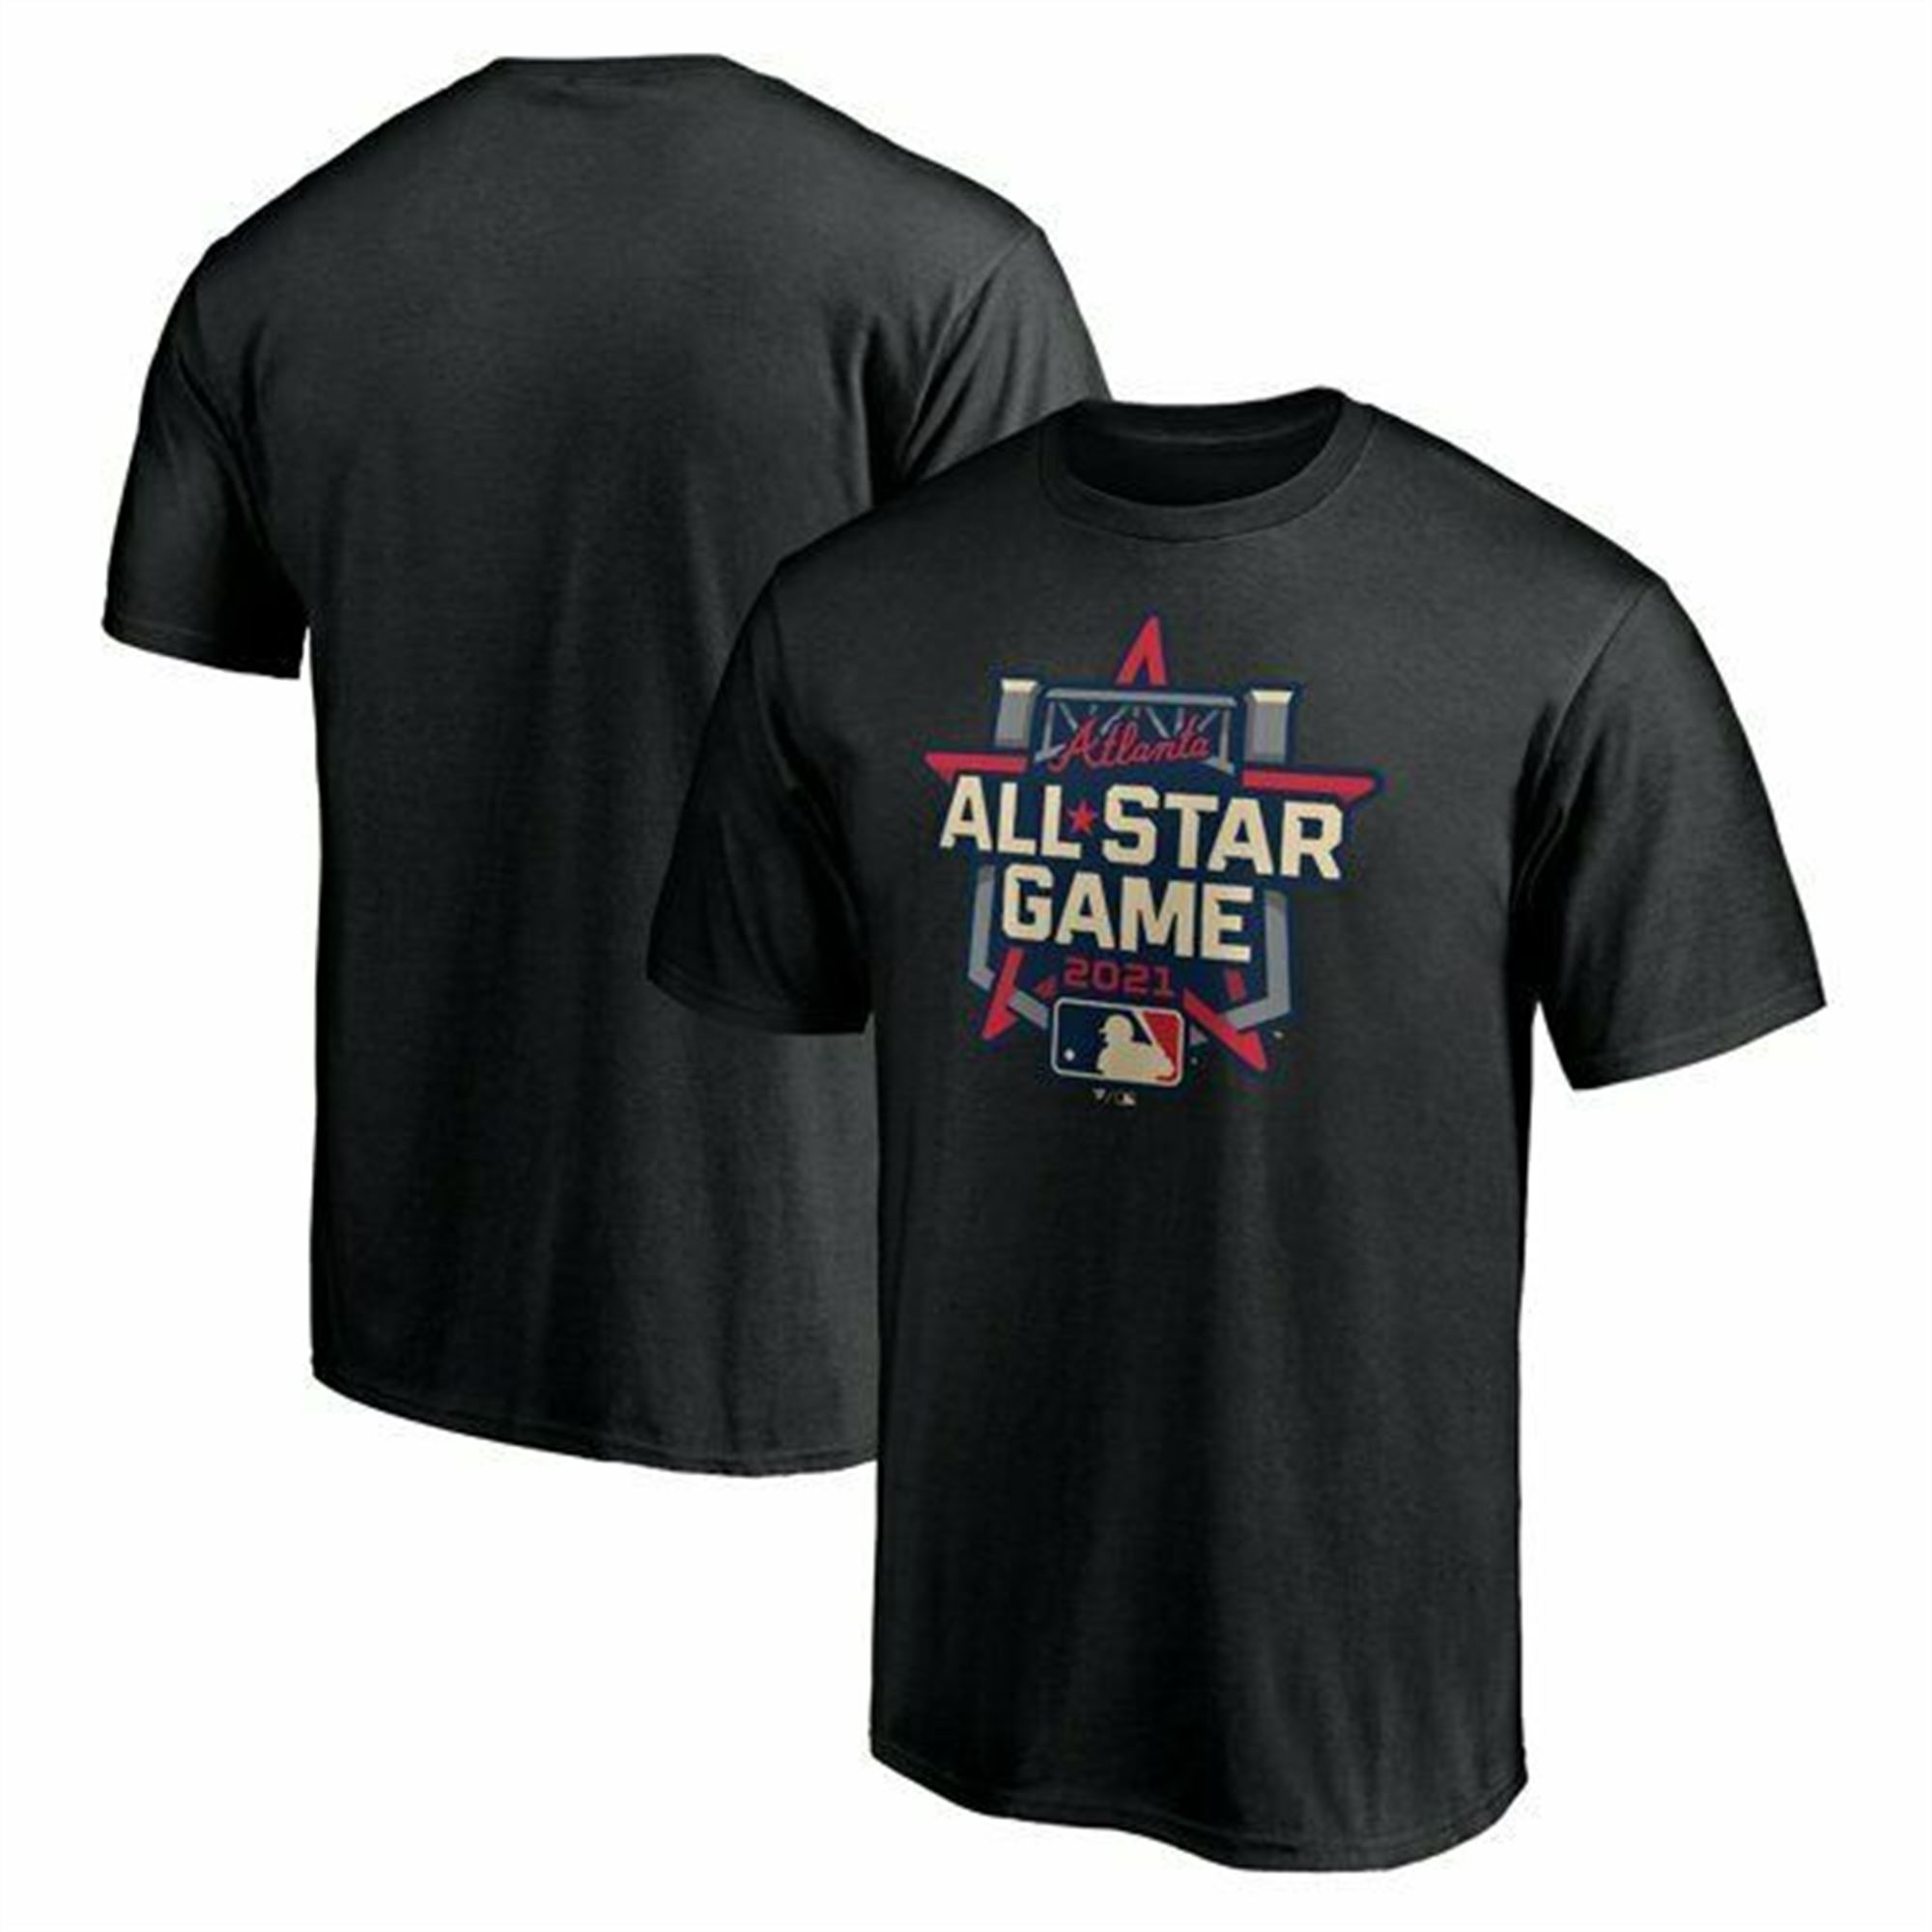 Atlanta Braves 2021 World Series Champions T-shirt - All Star Game